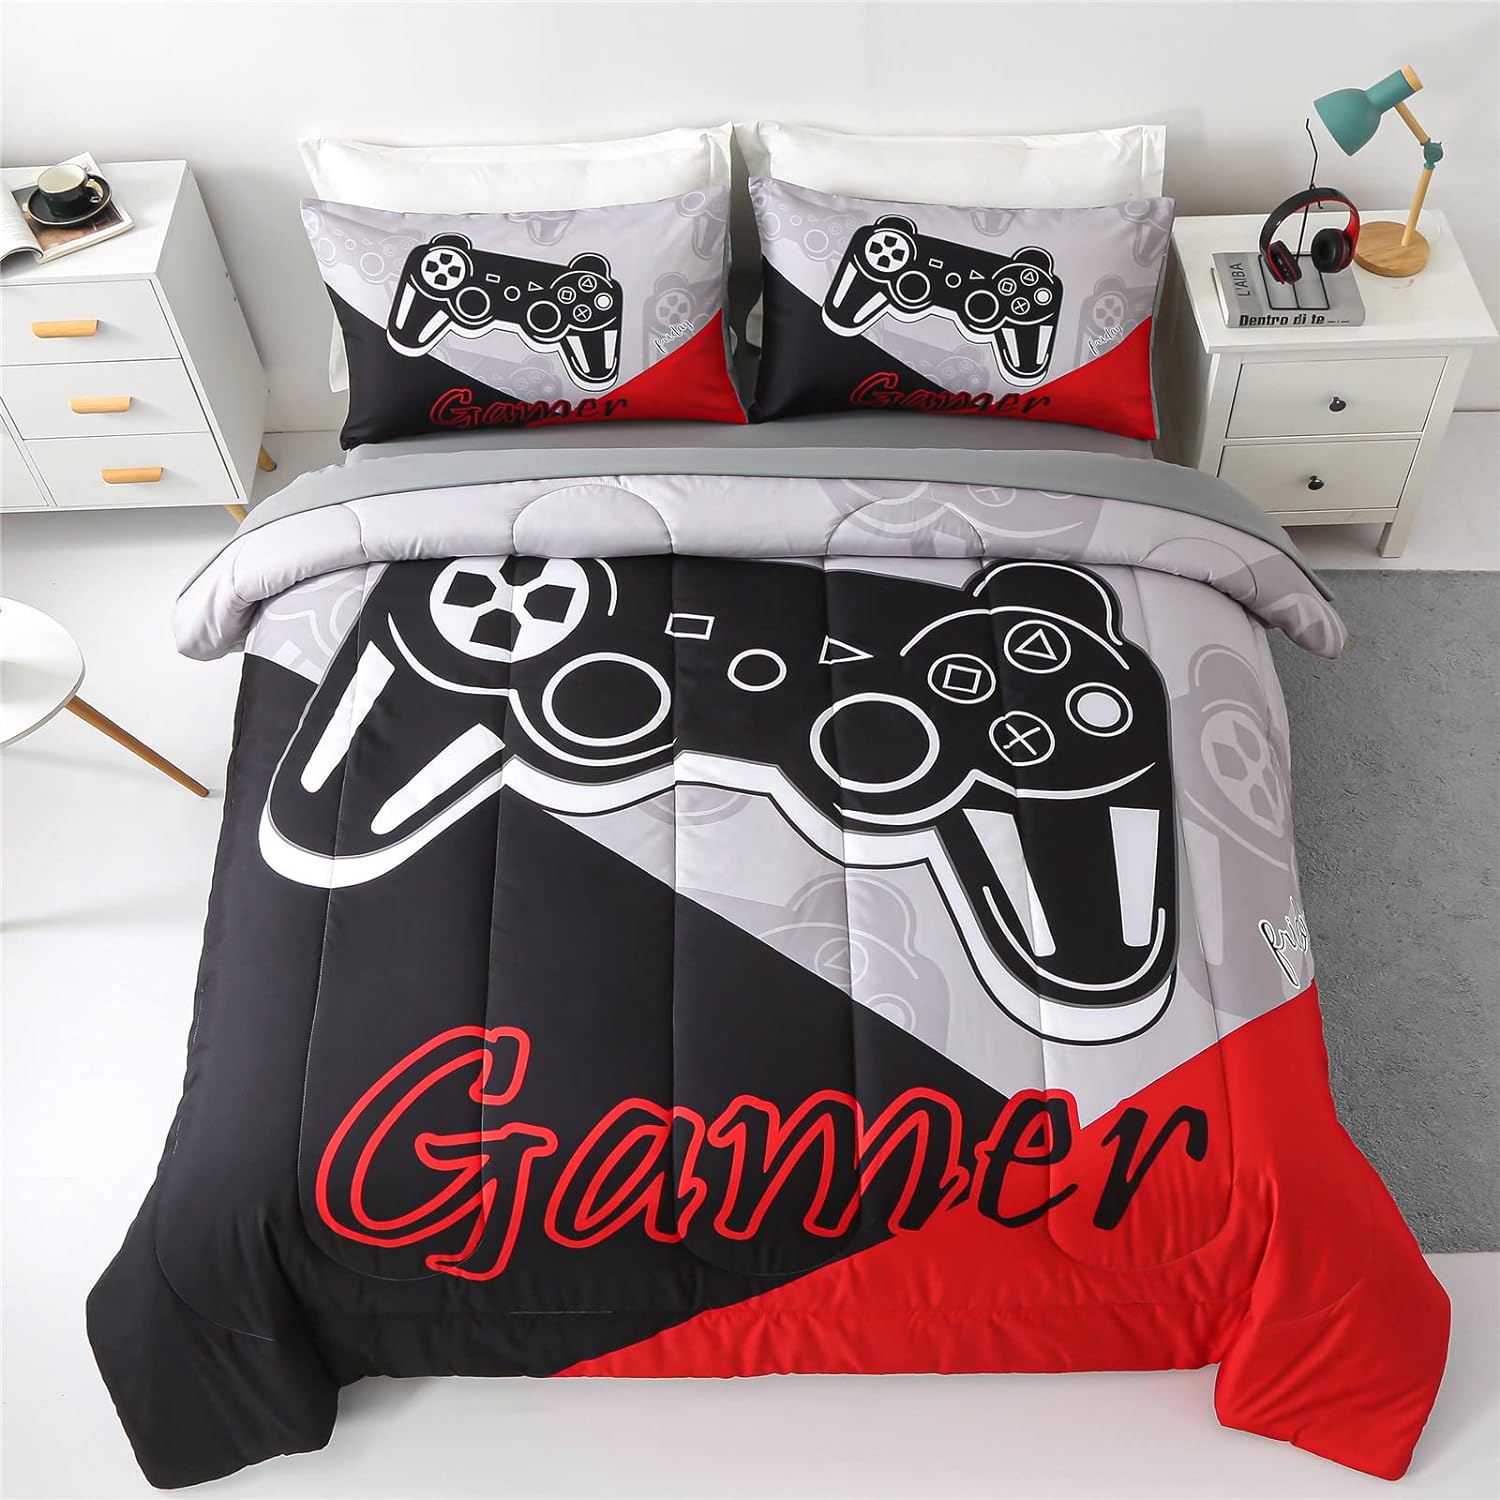 KAKKI 5 Piece Boys Full Gamer Comforter Set with Sheets, 3D Colorful Video Game Controller Comforter for Kids Teen, All Season Soft Microfiber Gaming Bedding Set(Red,Full)